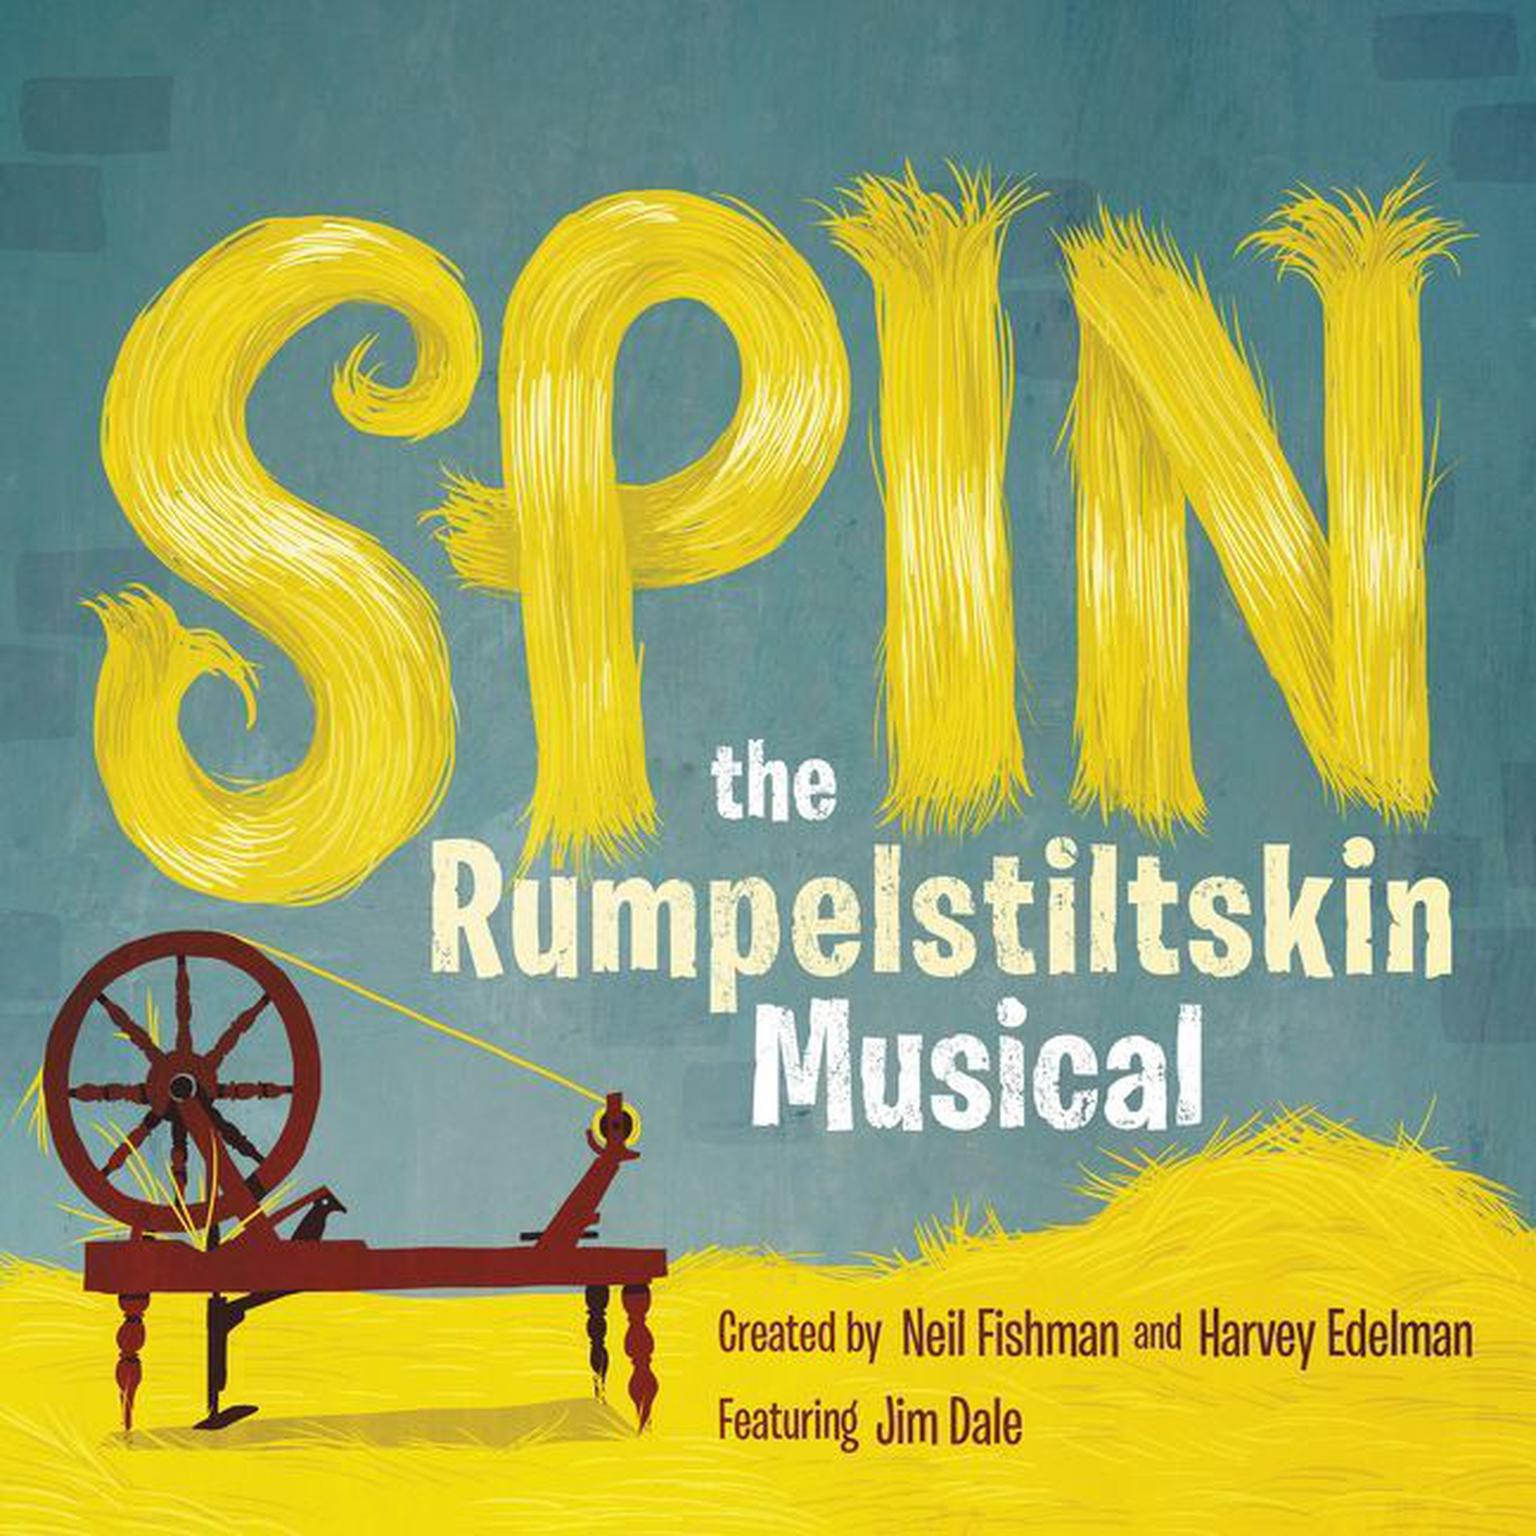 Spin: The Rumpelstiltskin Musical Audiobook, by David B. Coe